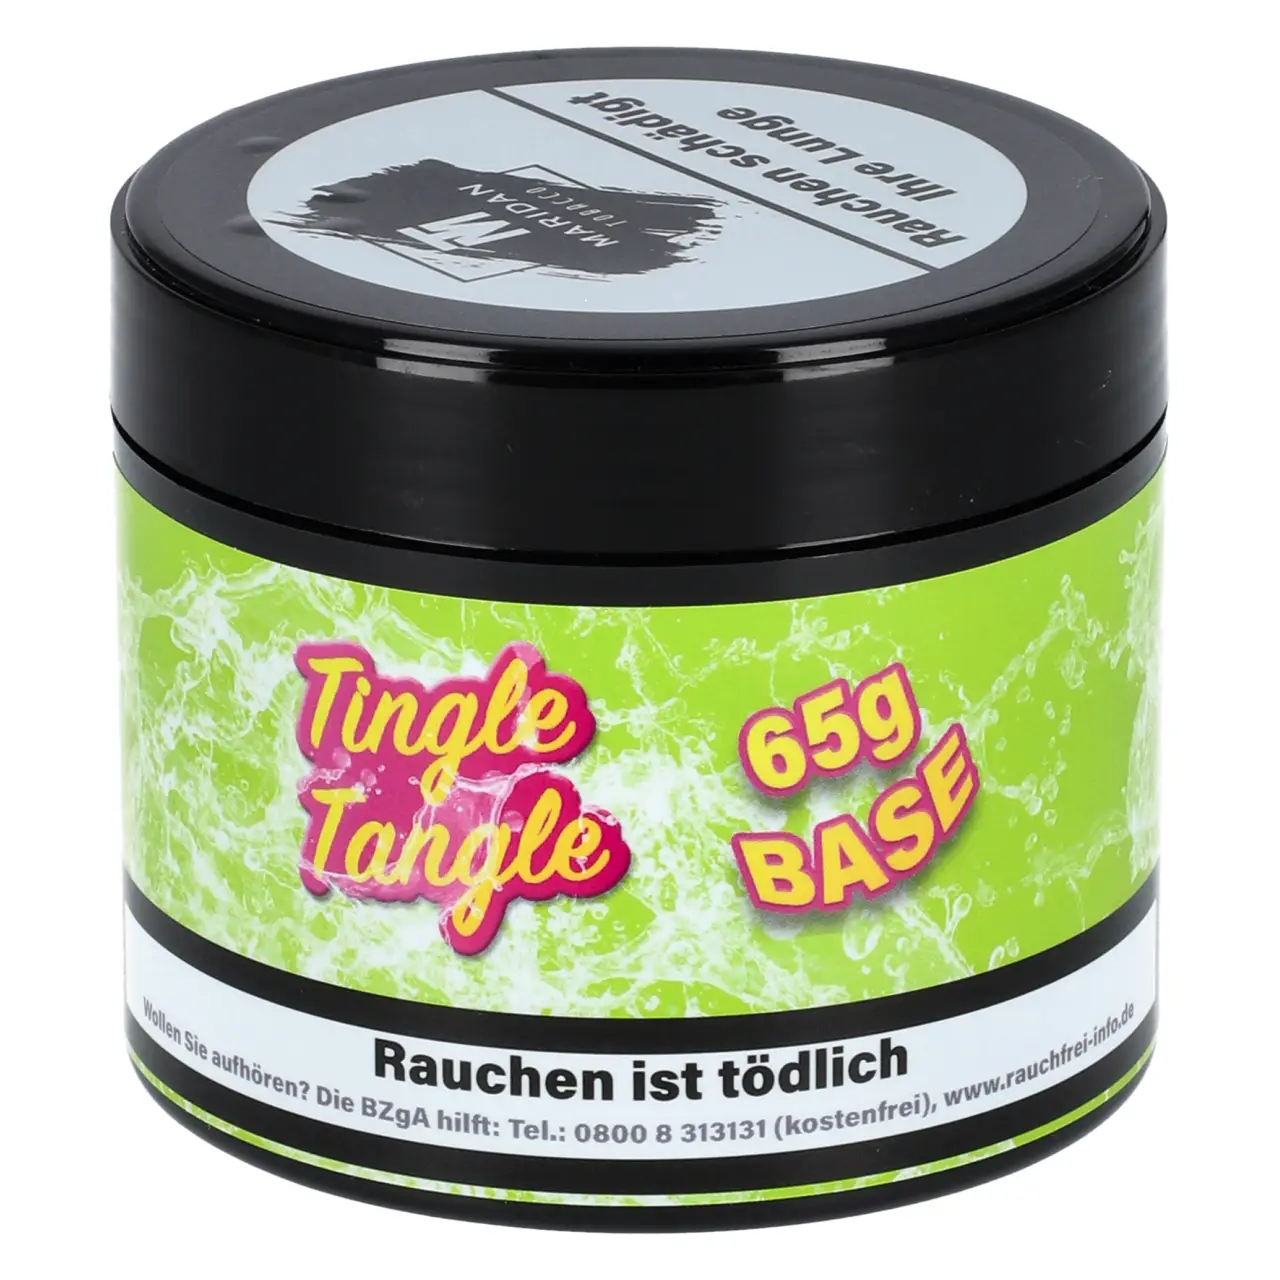 Maridan Base Pfeifentabak Tingle Tangle - Grapefruit Limette Maracuja - 65g